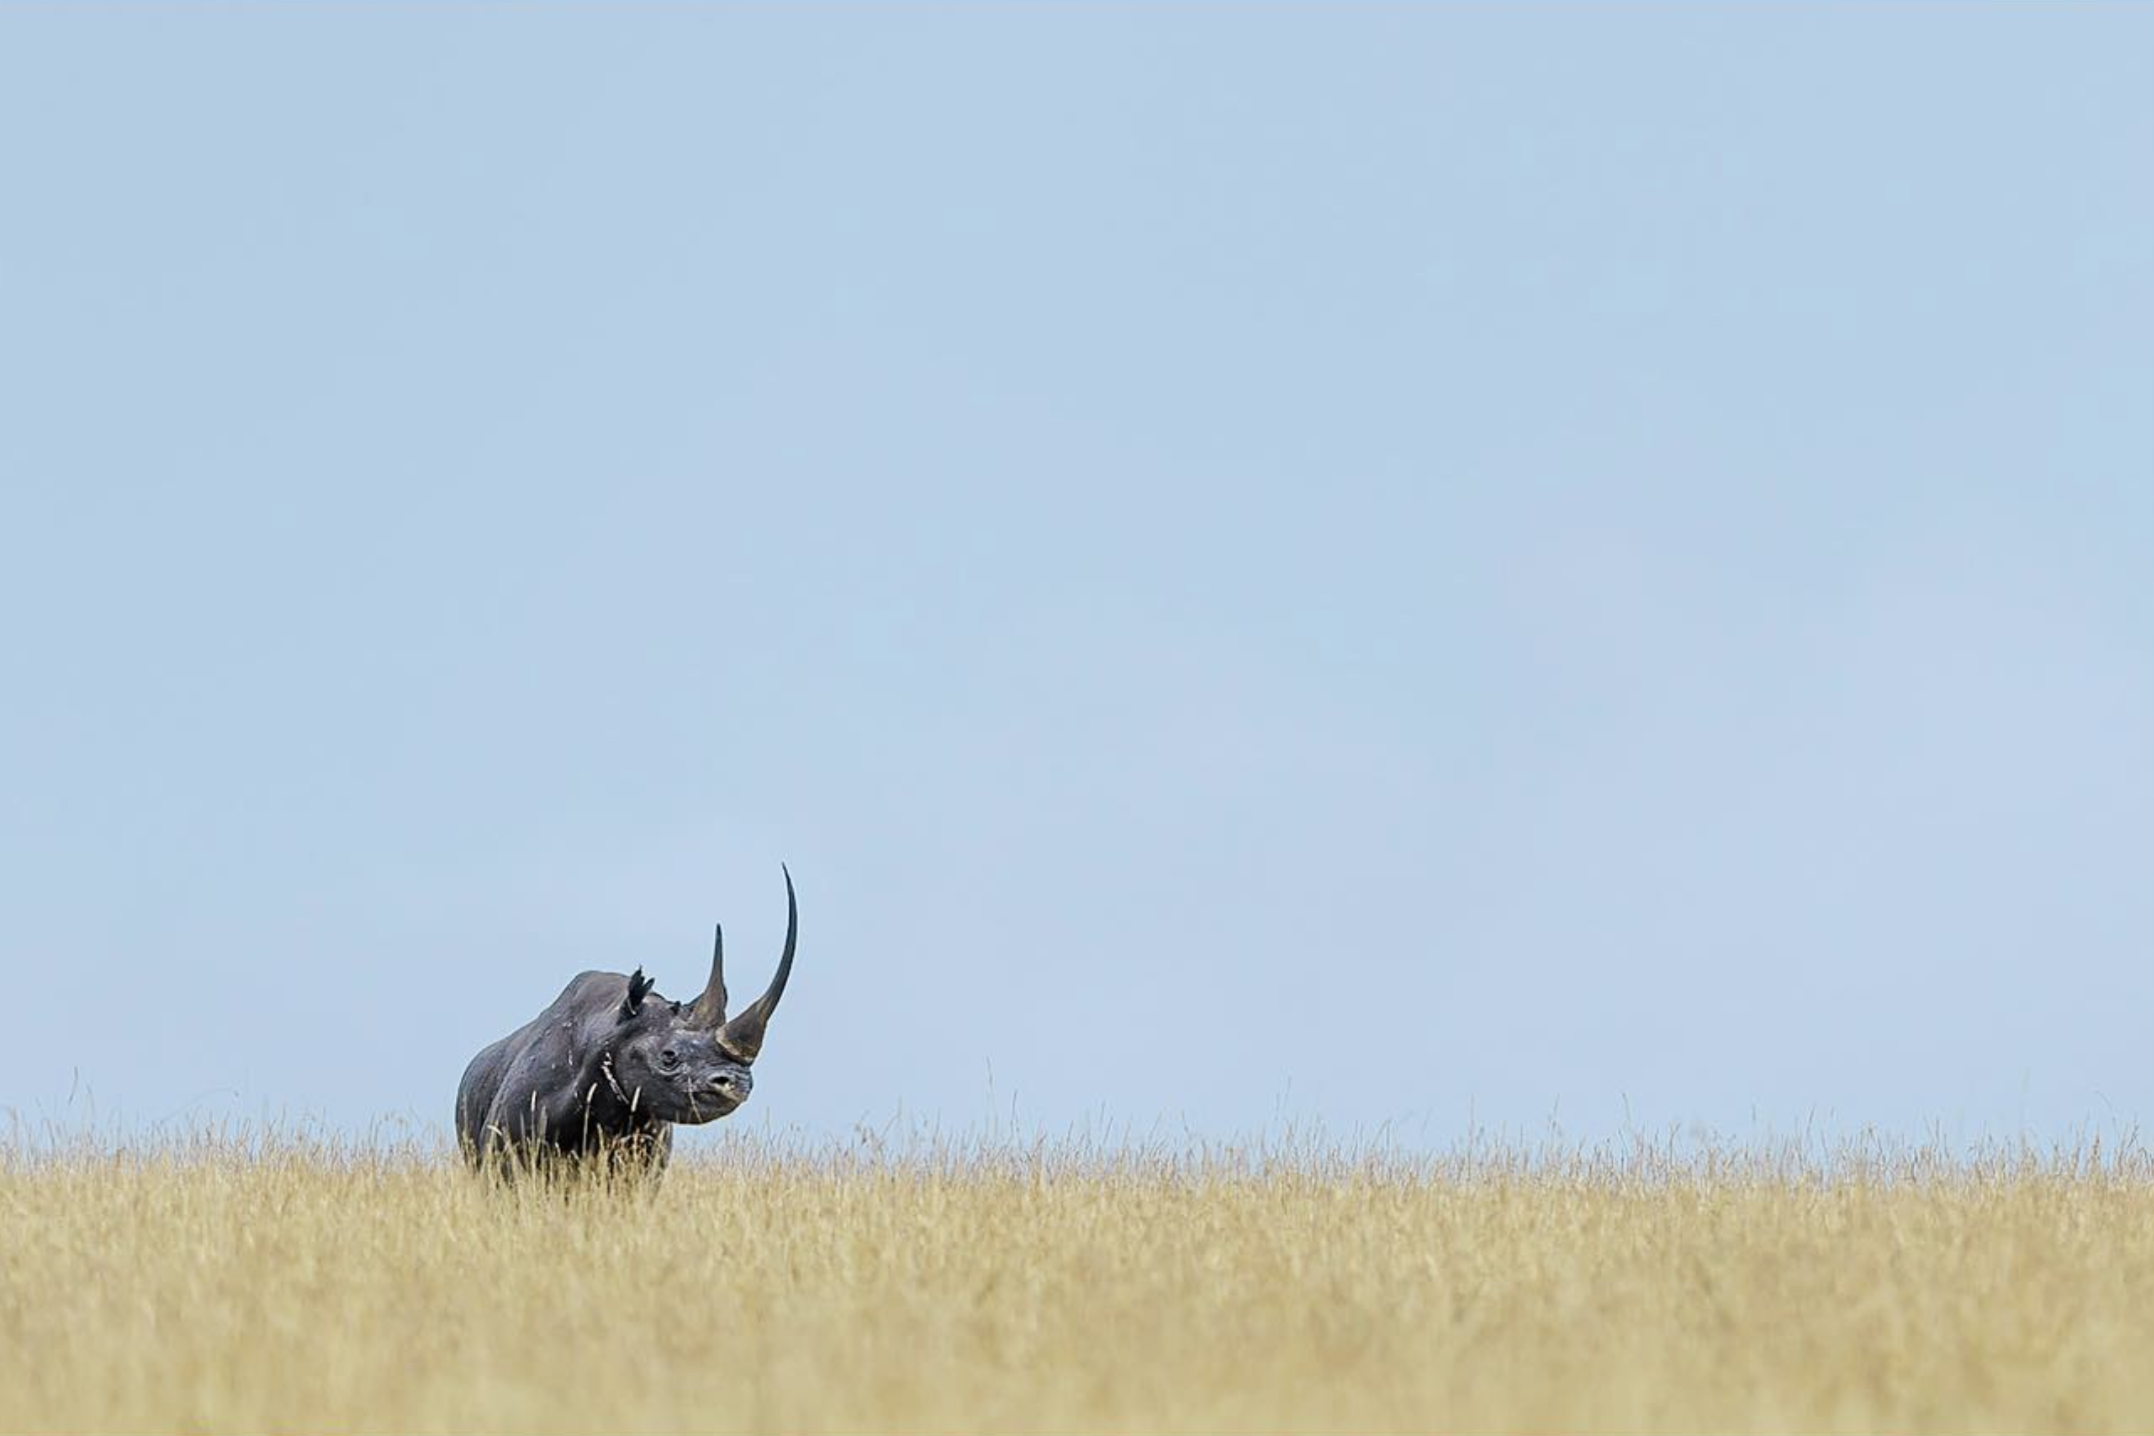 A rhino in the grass, taken by David Lloyd